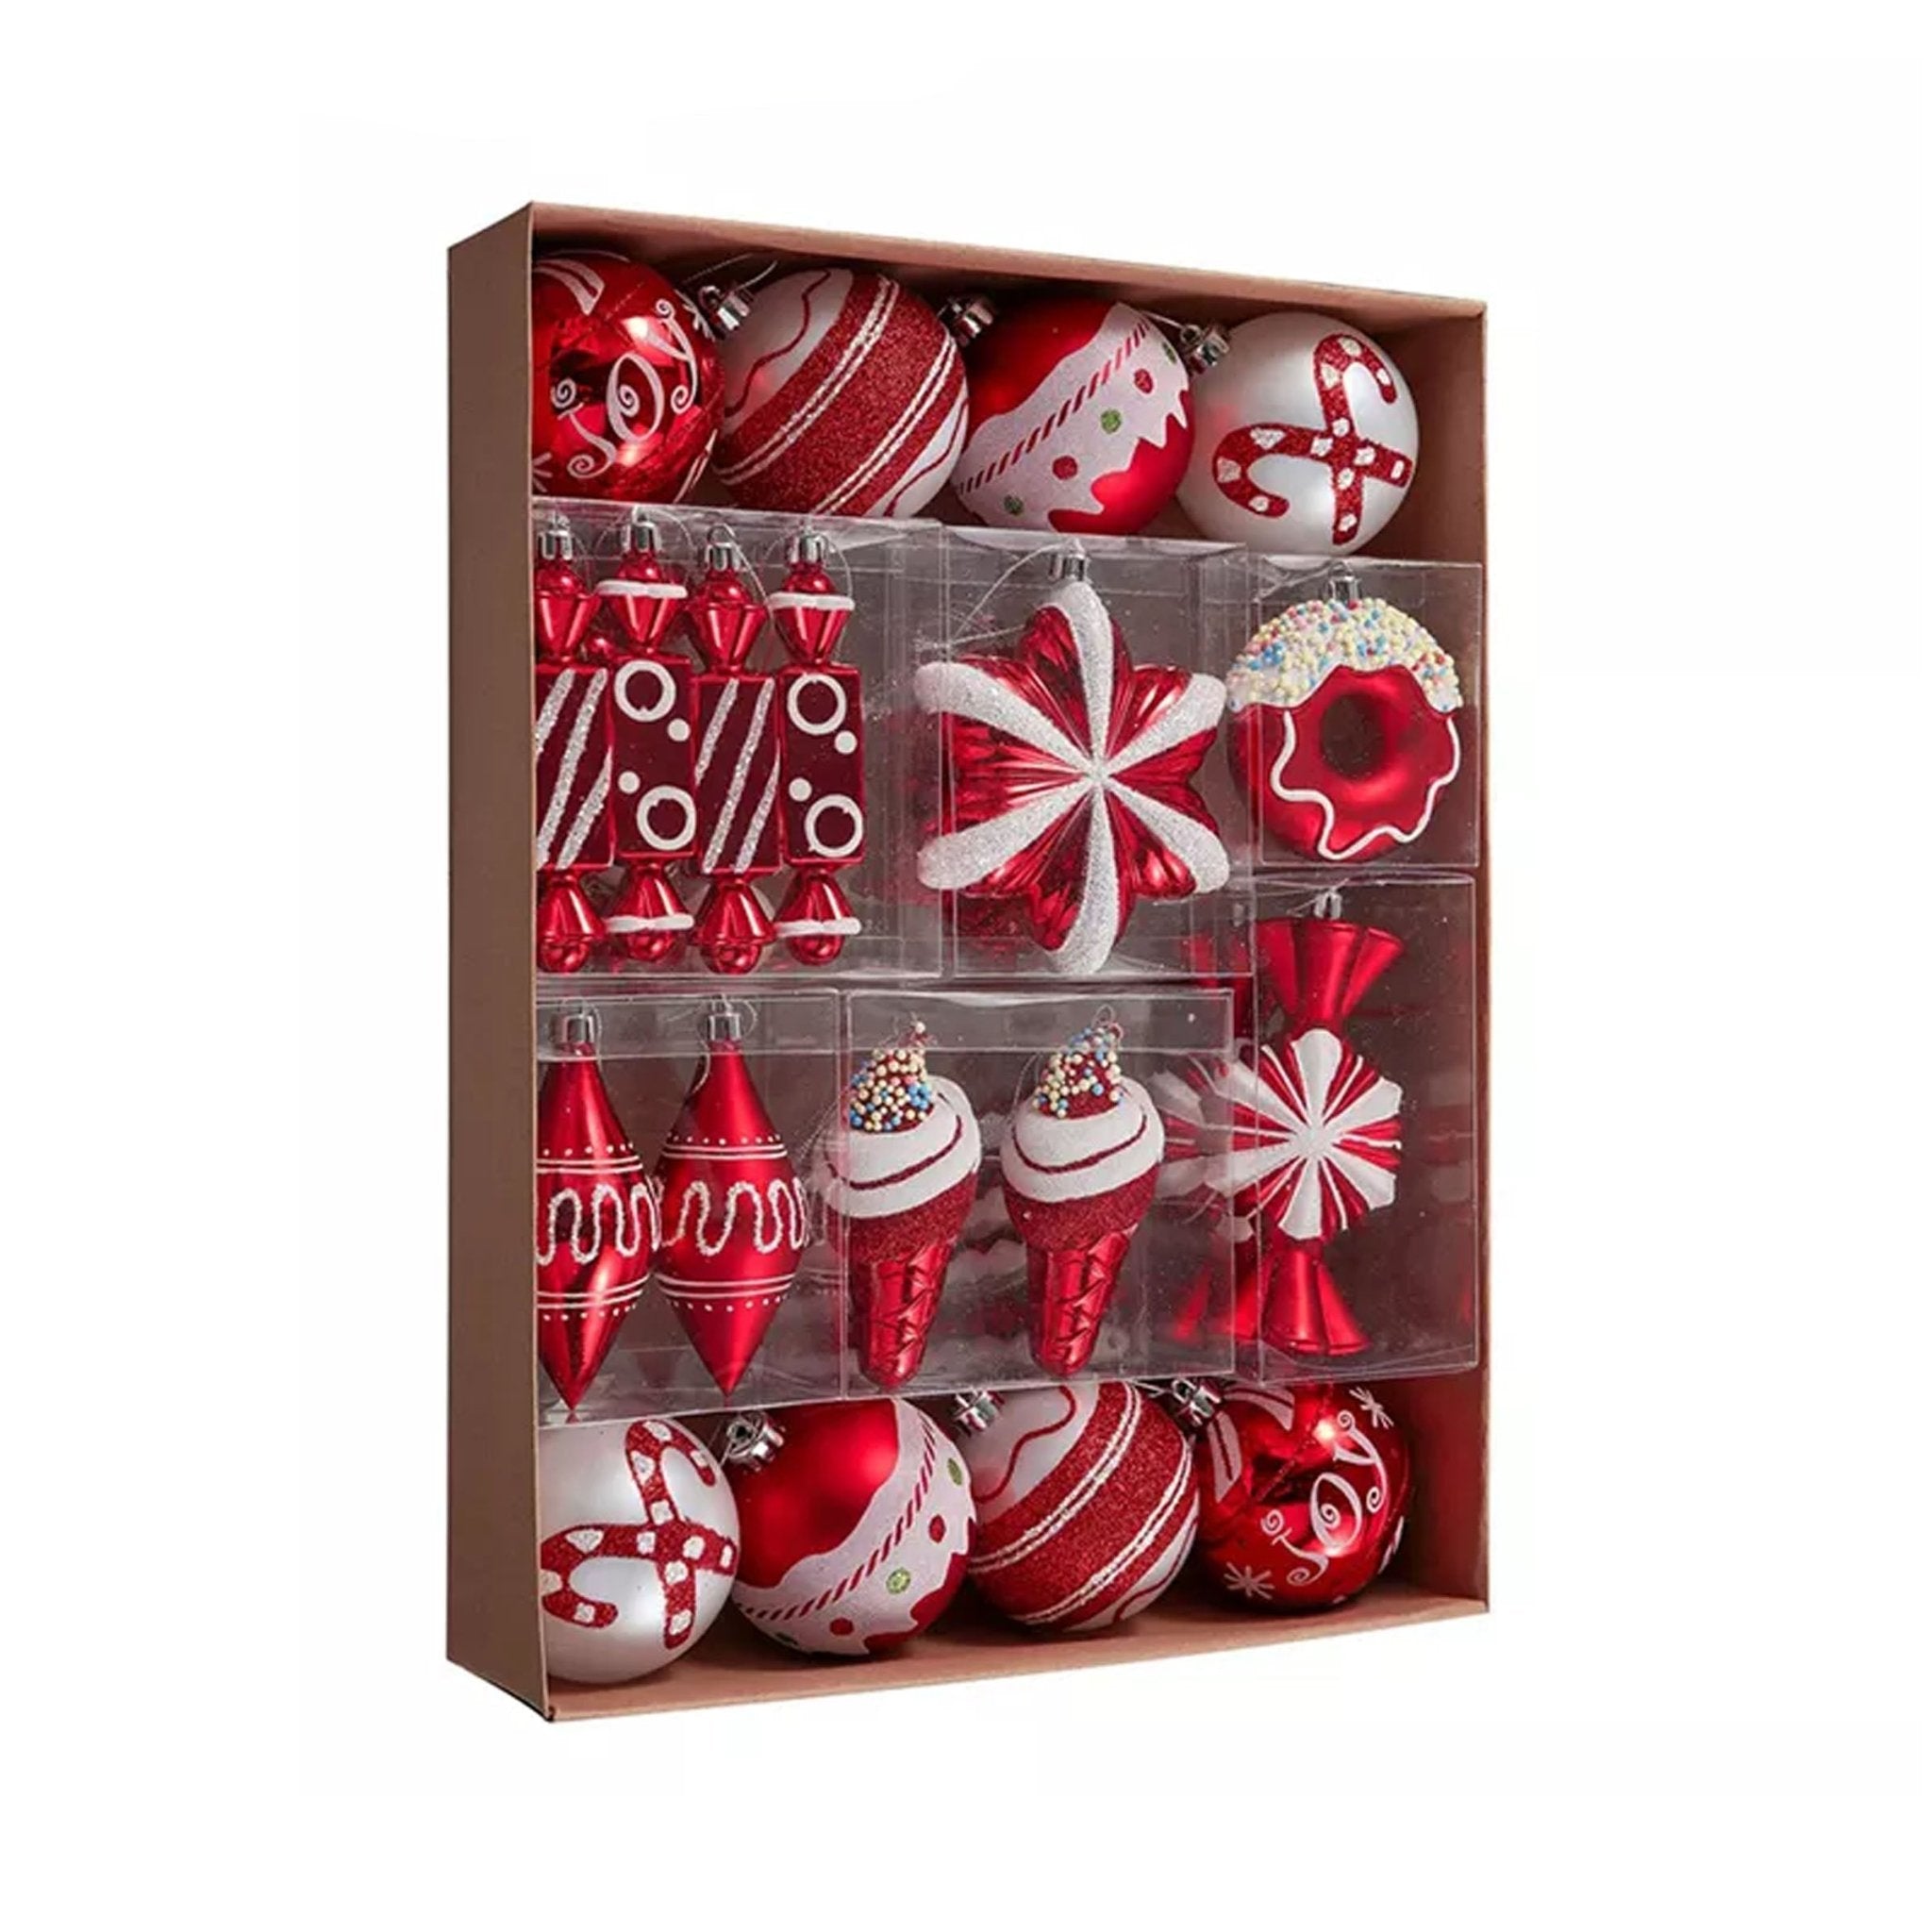 60pcs 3-12cm Deluxe Candy Shatterproof Ornament Set 00060002 - MODA FLORA Santa's Workshop